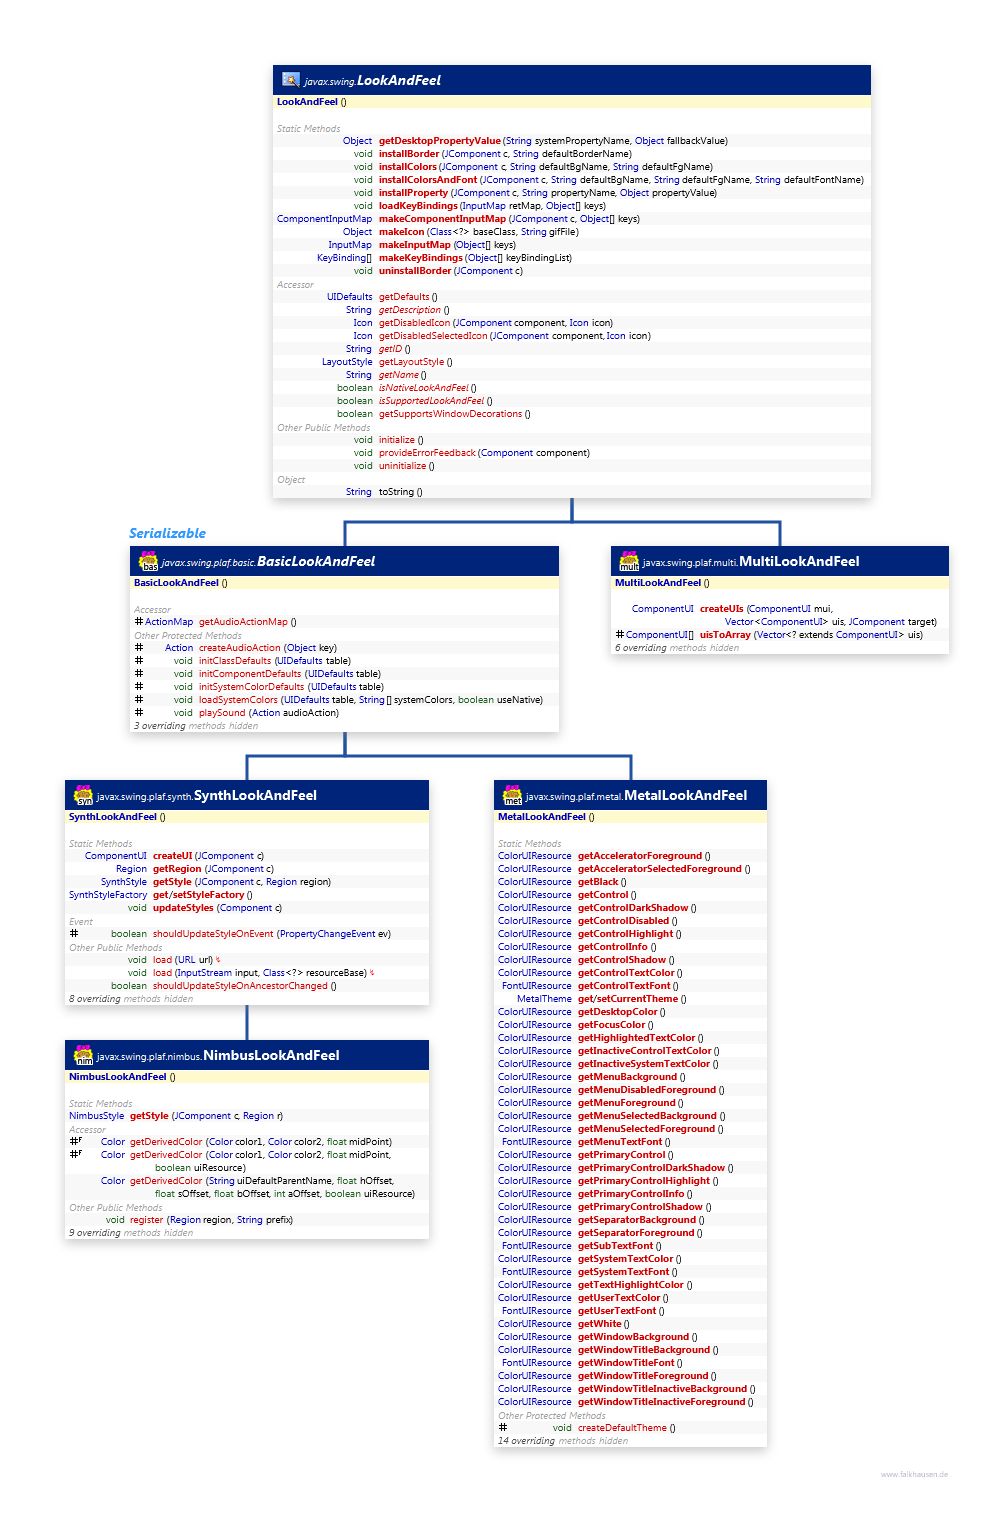 LookAndFeel class diagram and api documentation for Java 10